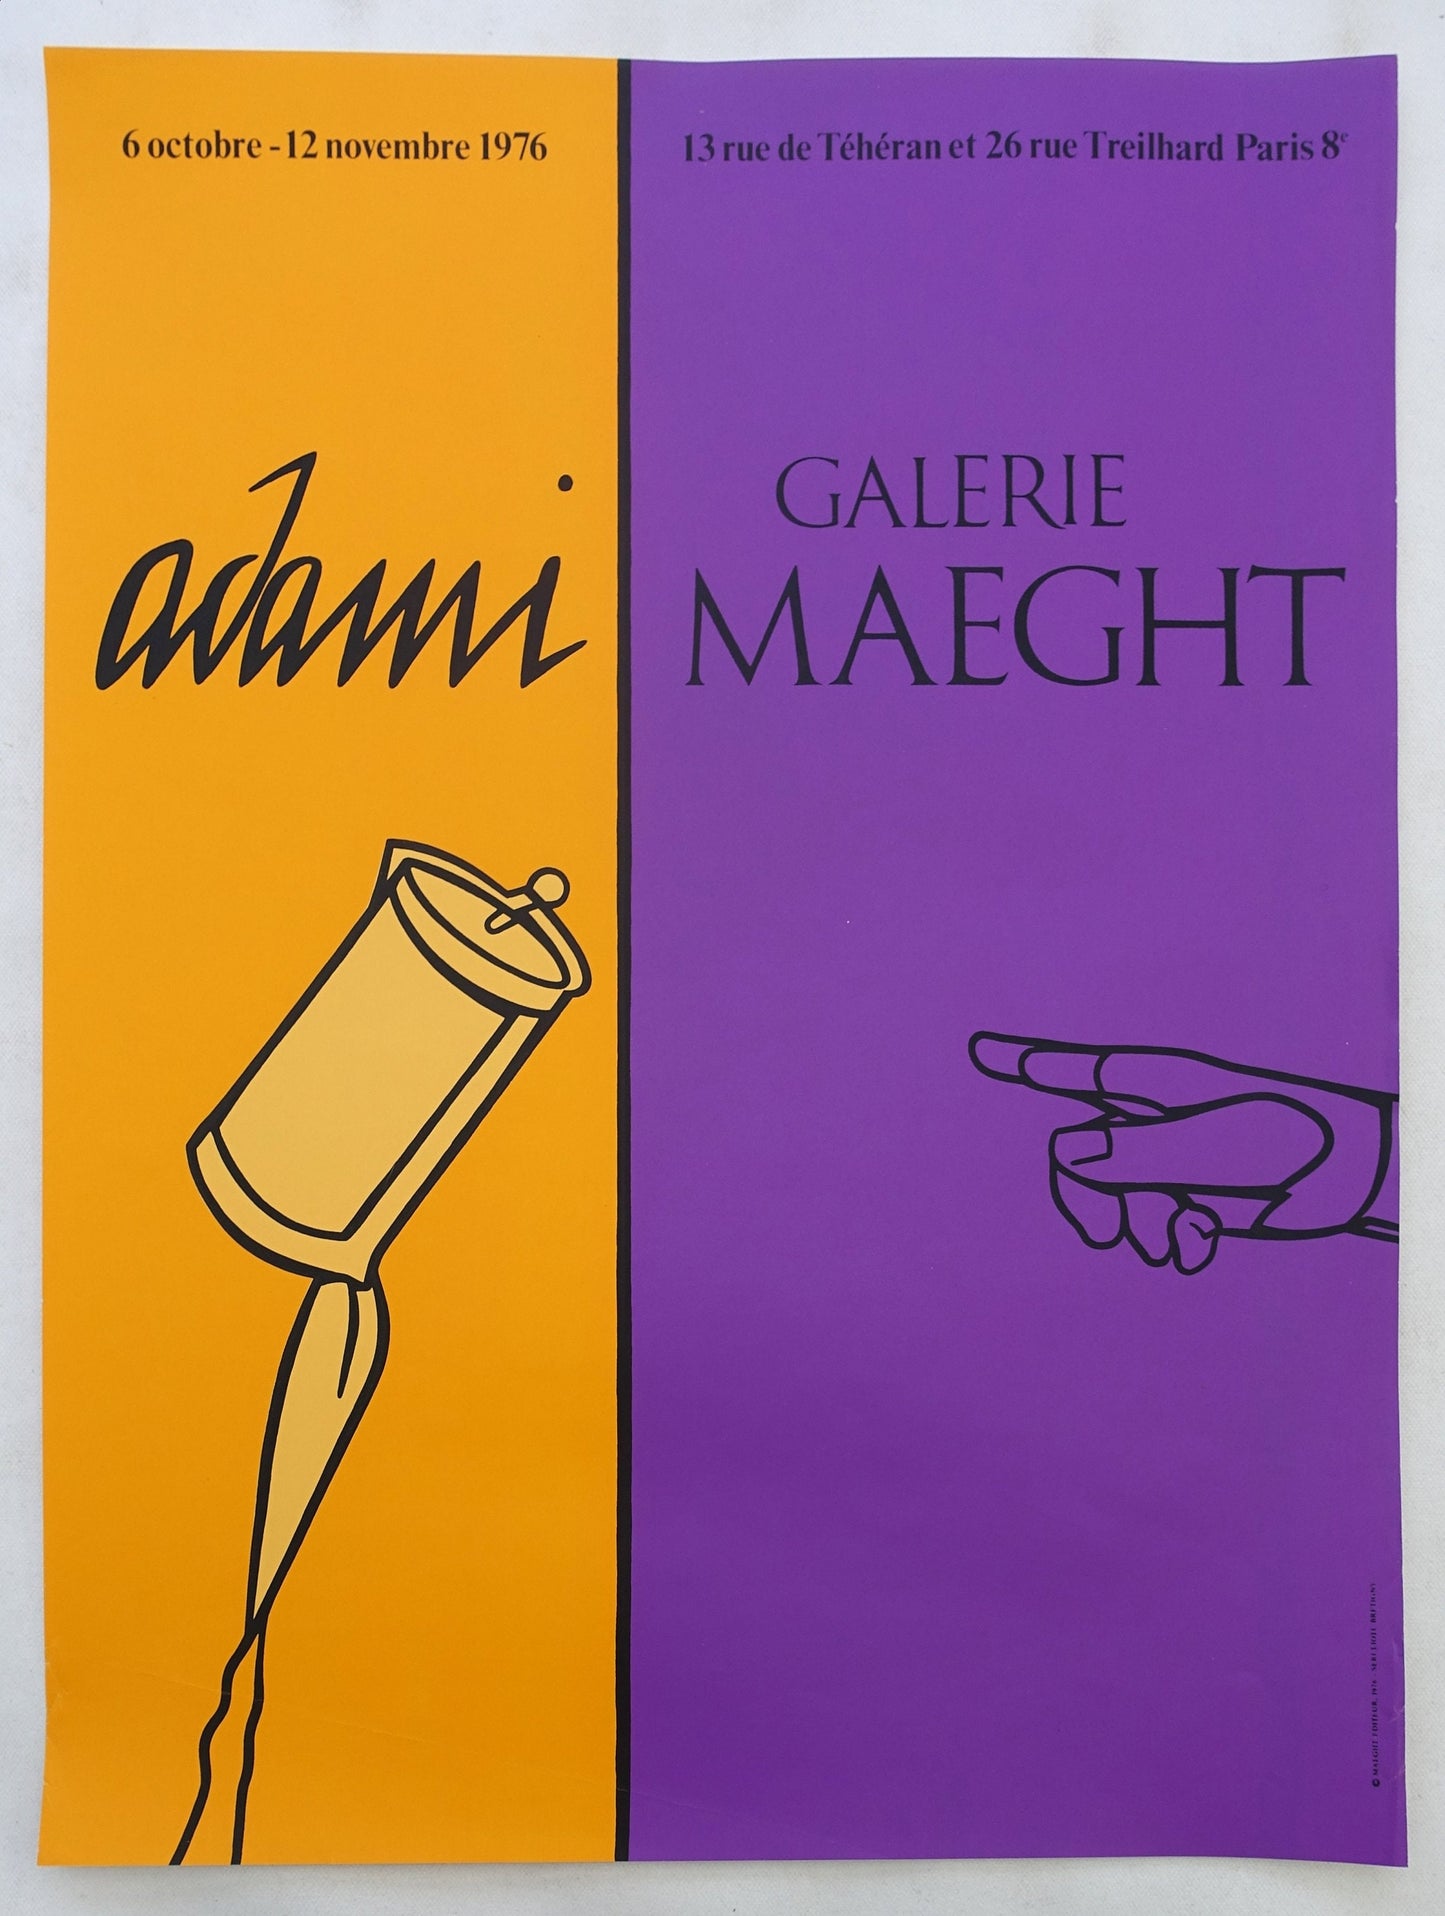 1976 Adami Exhibition Poster Galerie Maeght - Original Vintage Poster